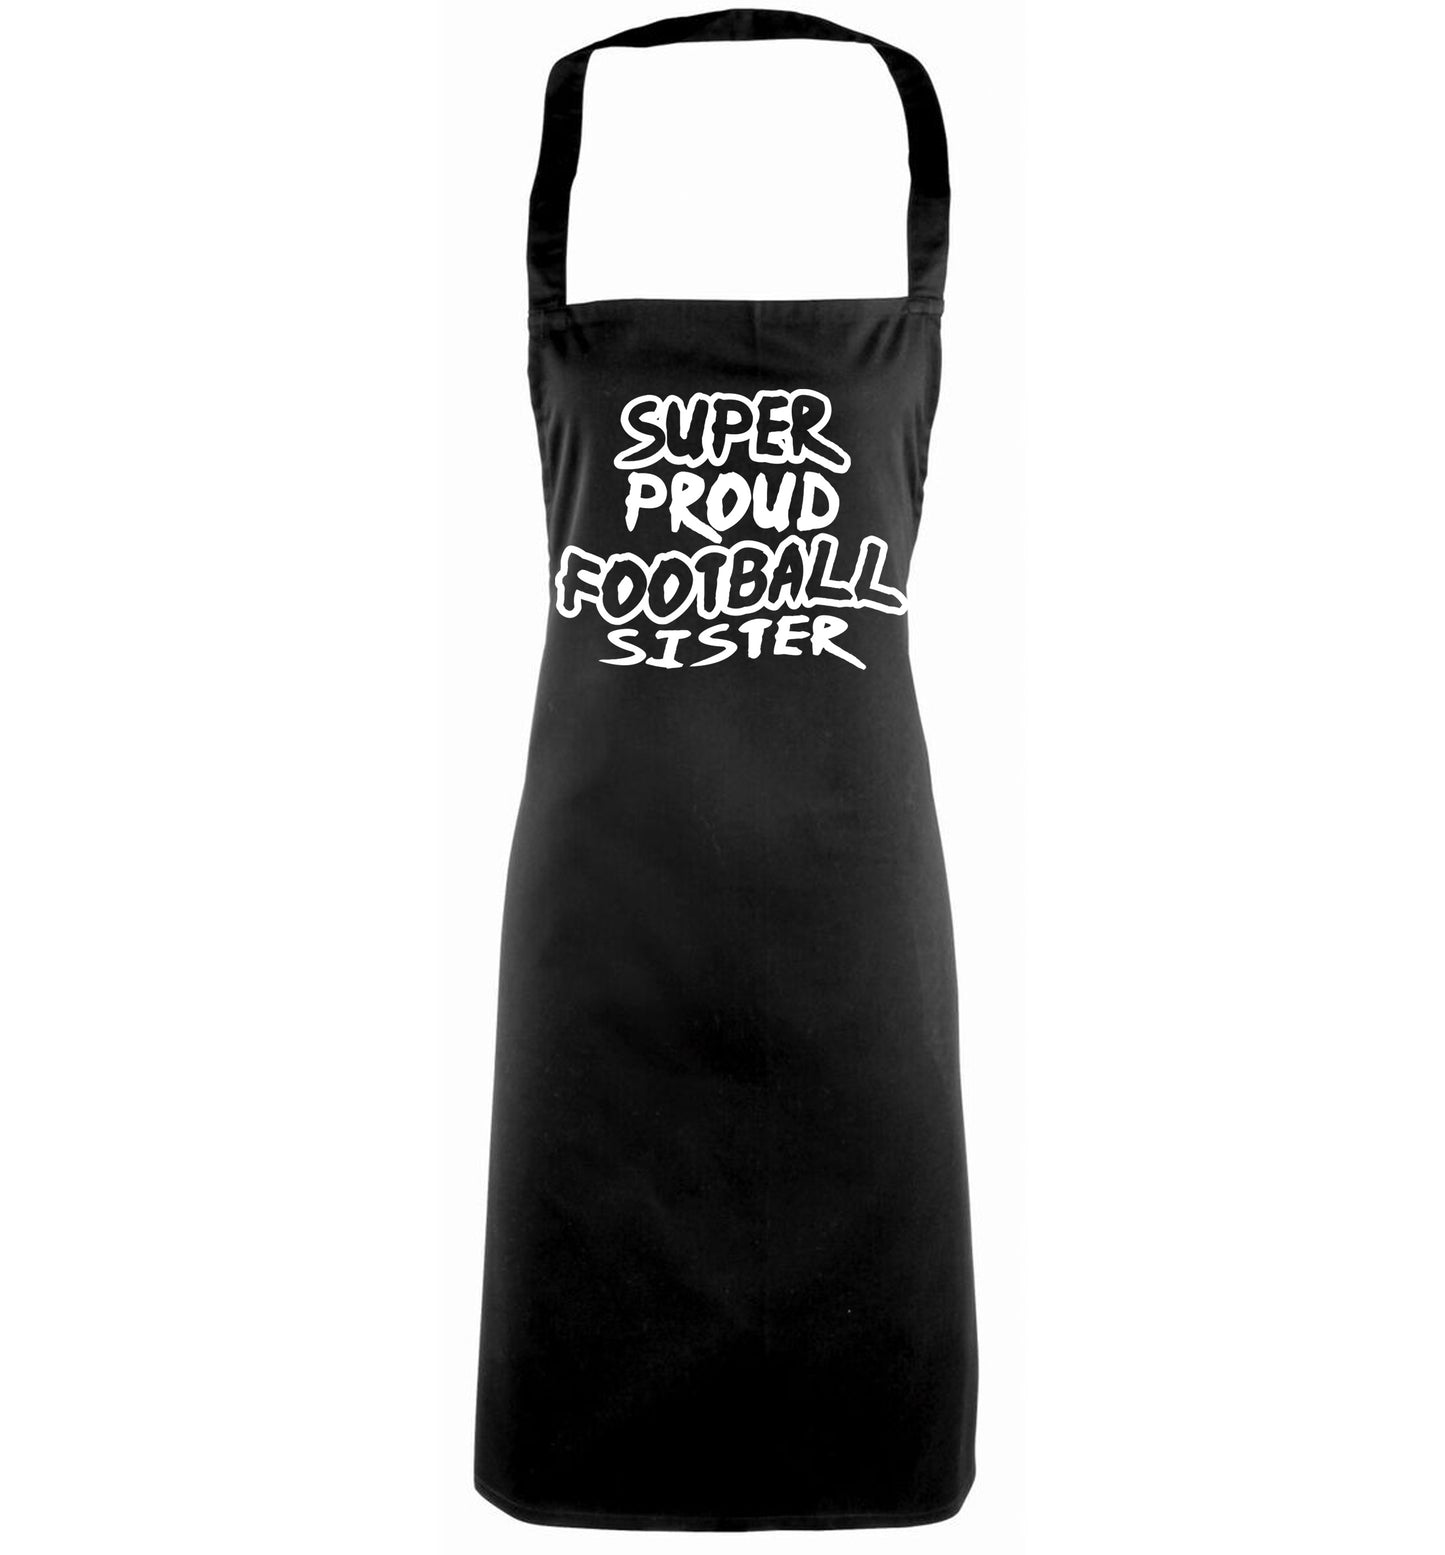 Super proud football sister black apron